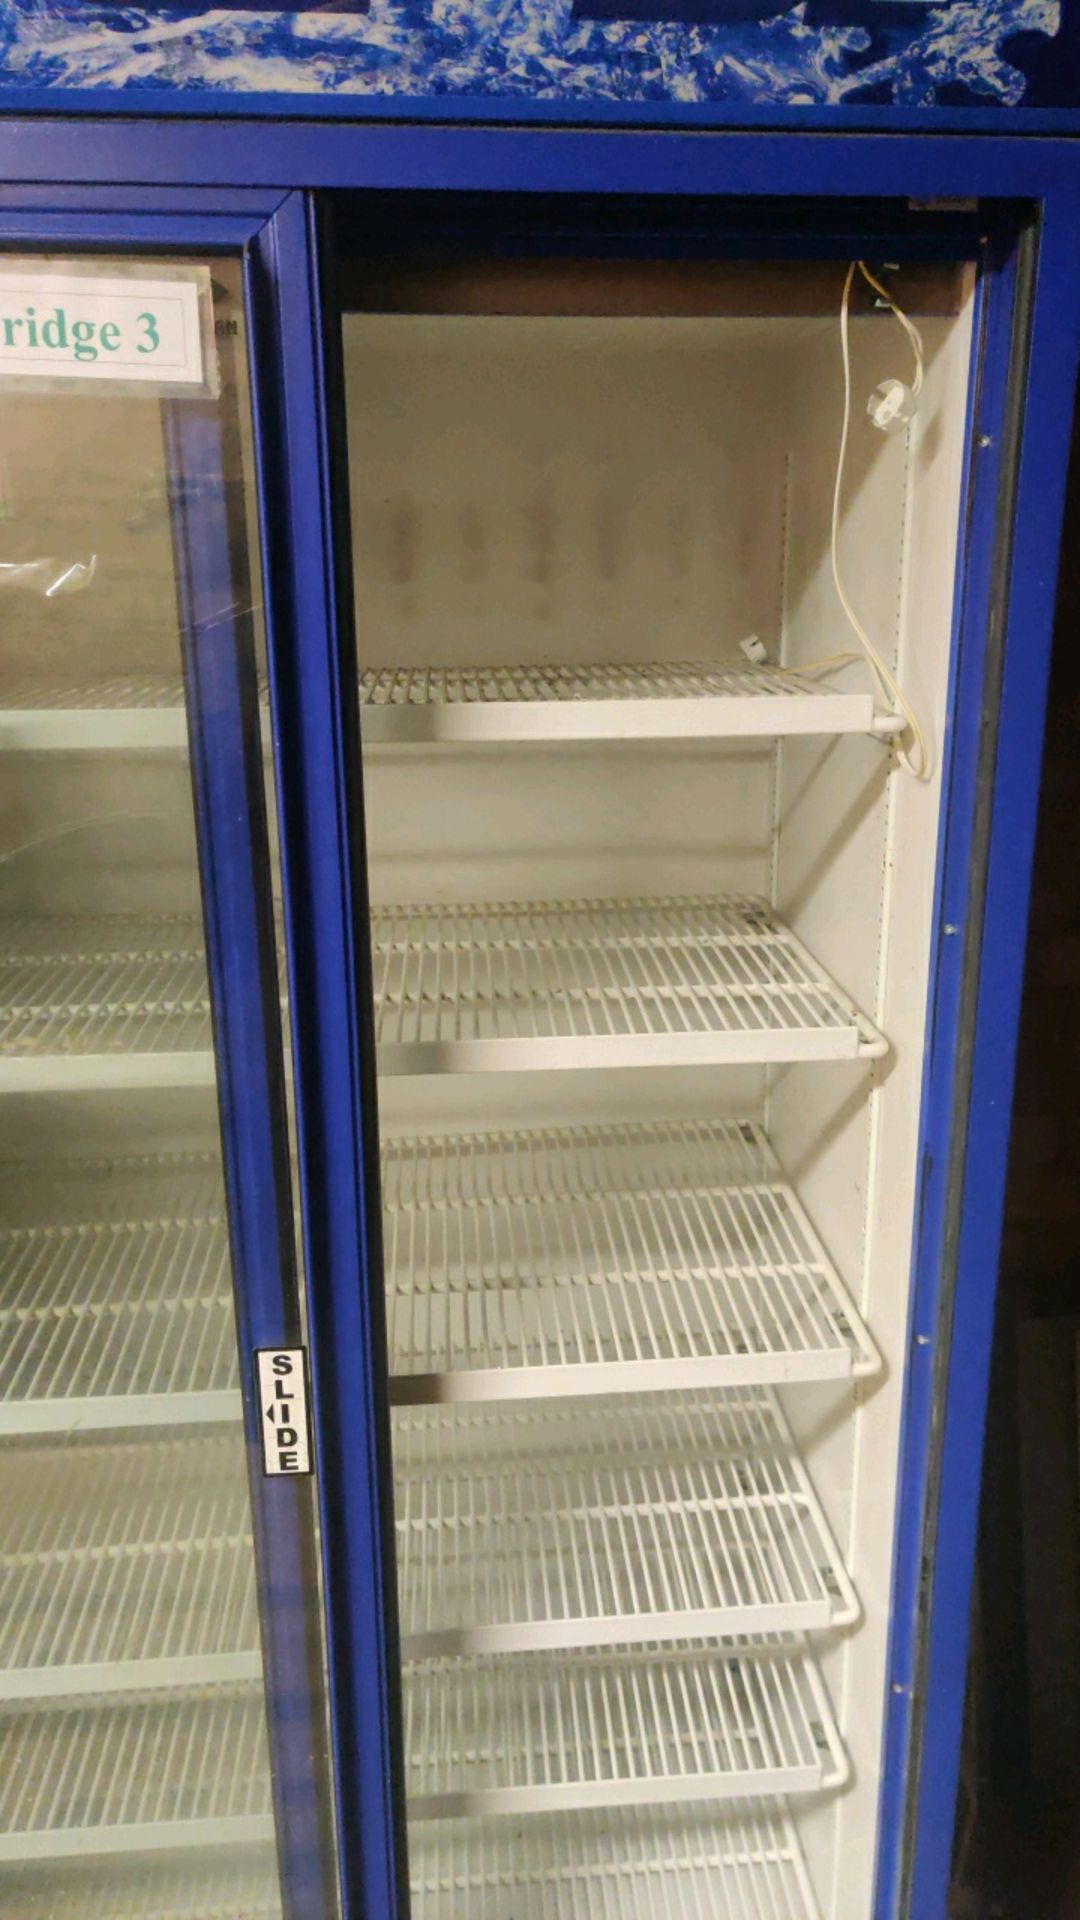 Pepsi branded fridge - Image 2 of 2